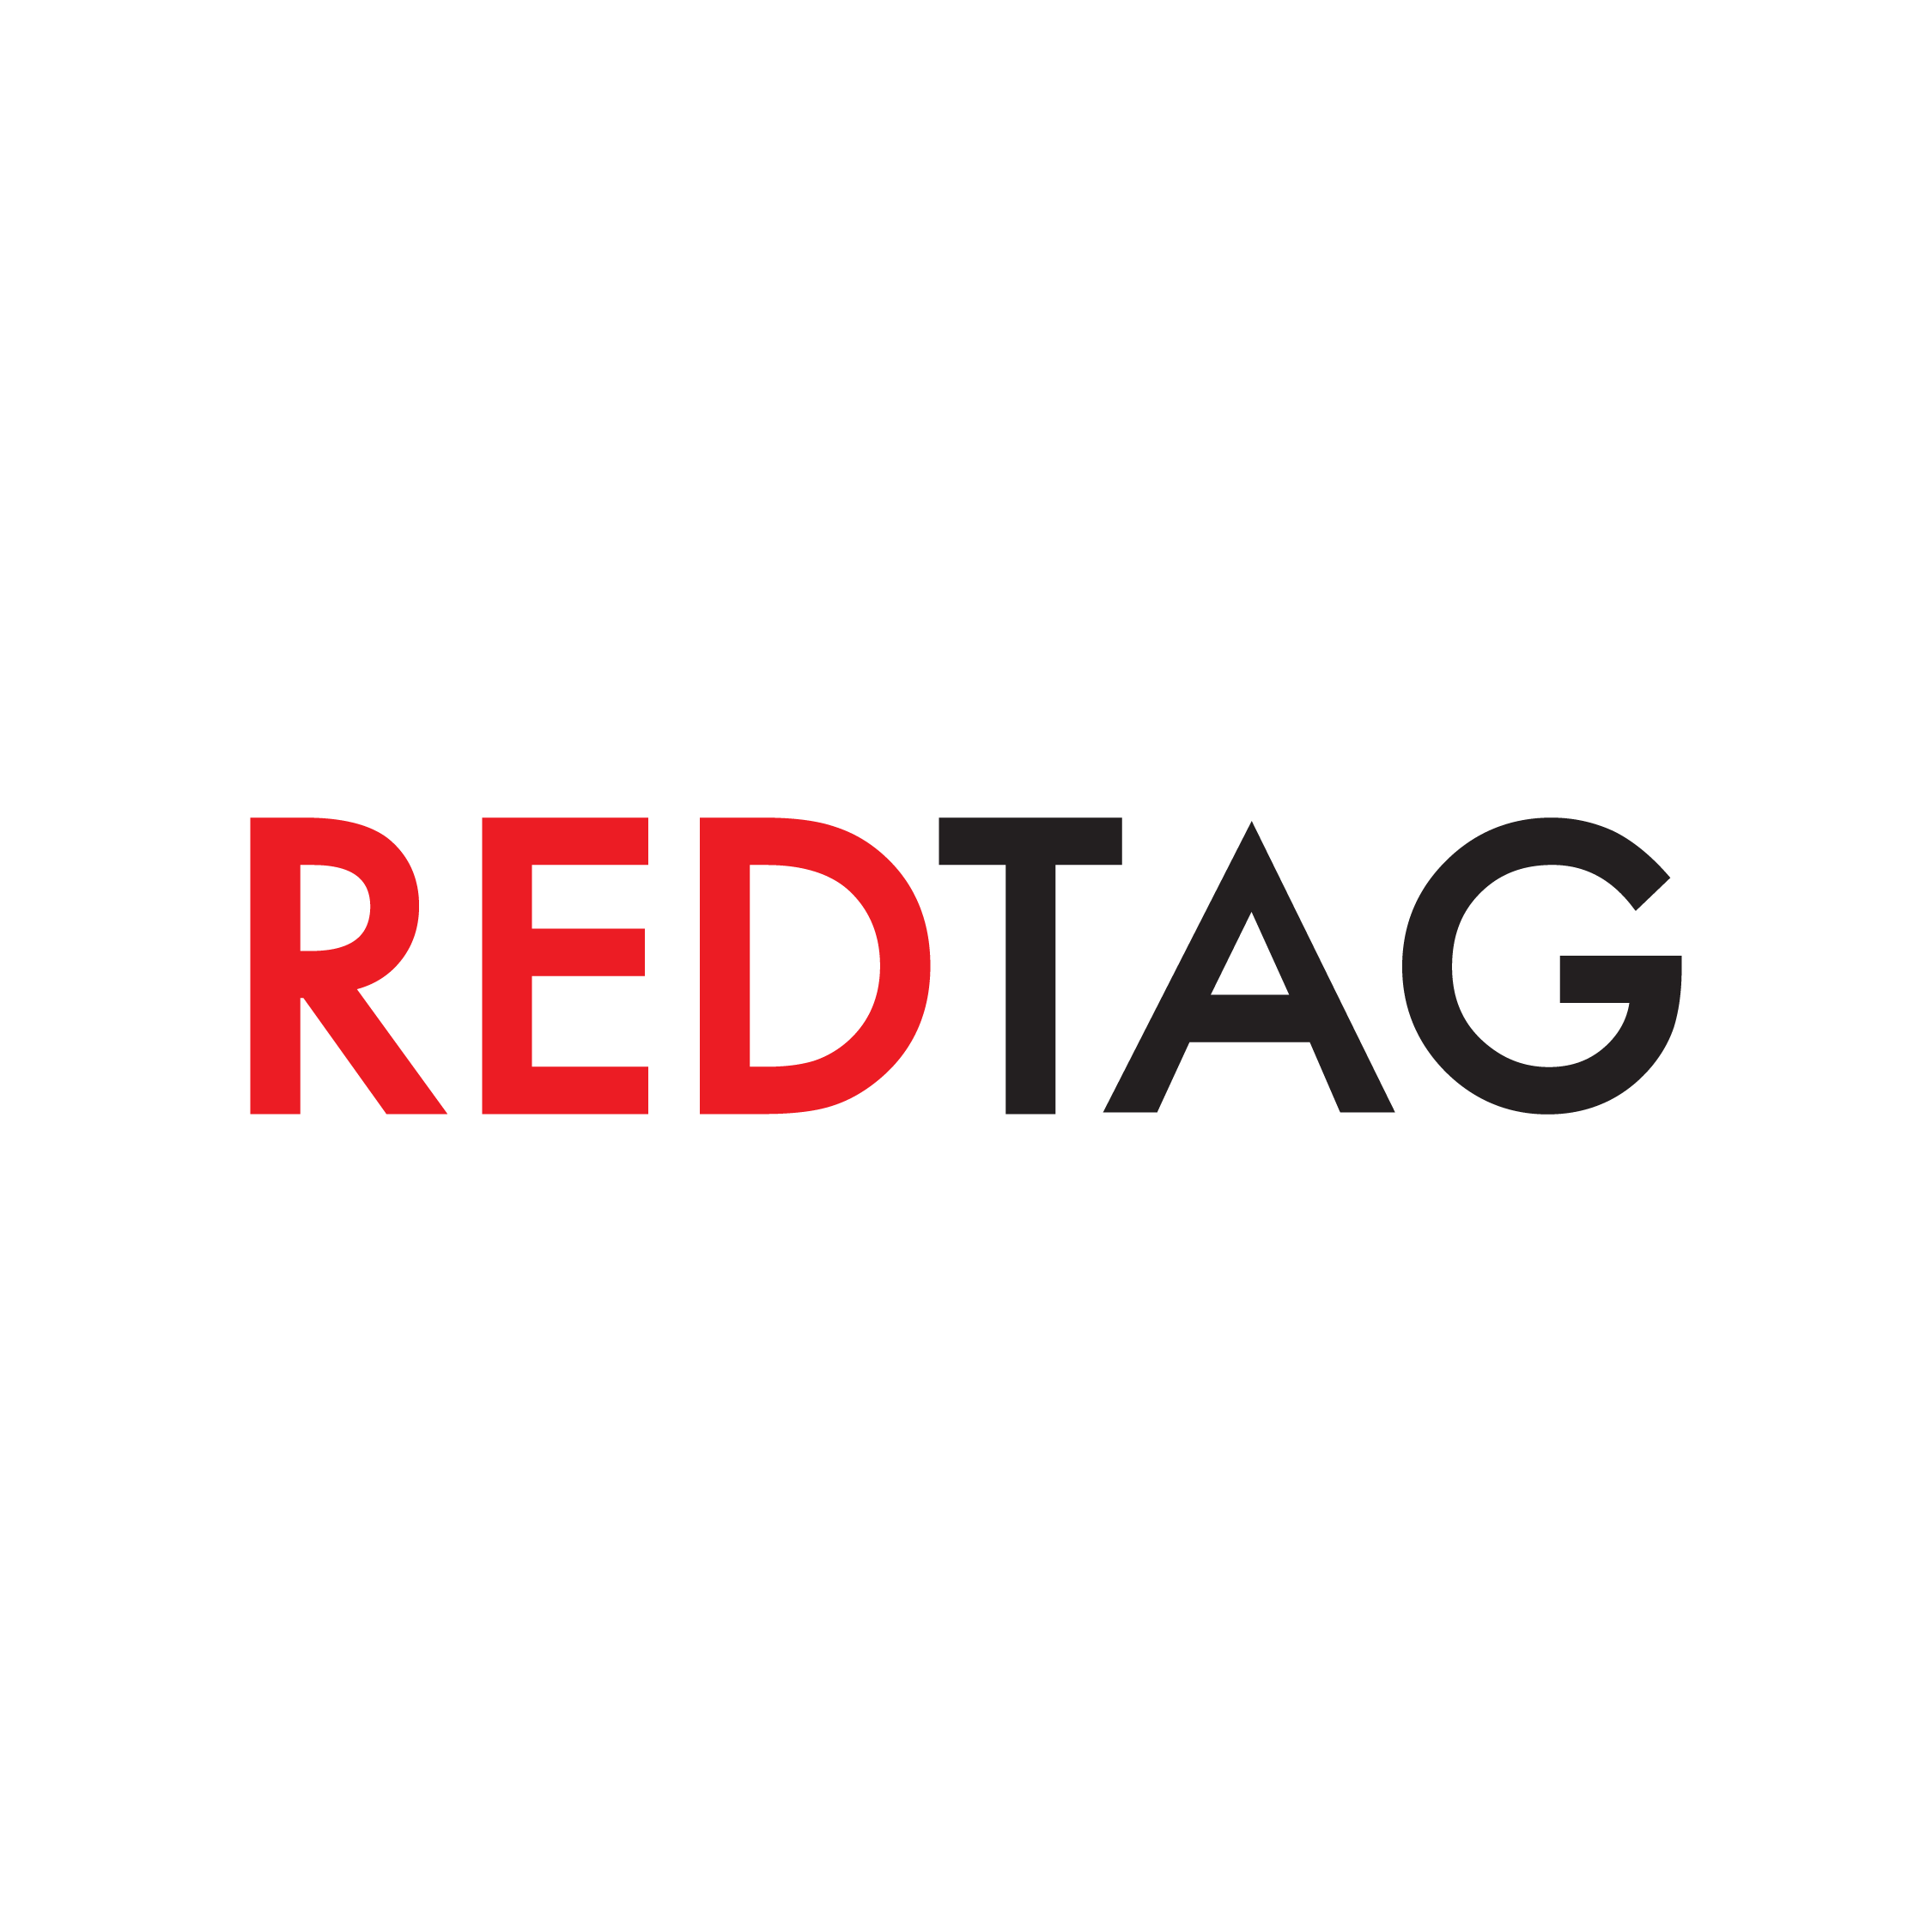 Логотип компании RED TAG в формате PNG, EPS, CDR